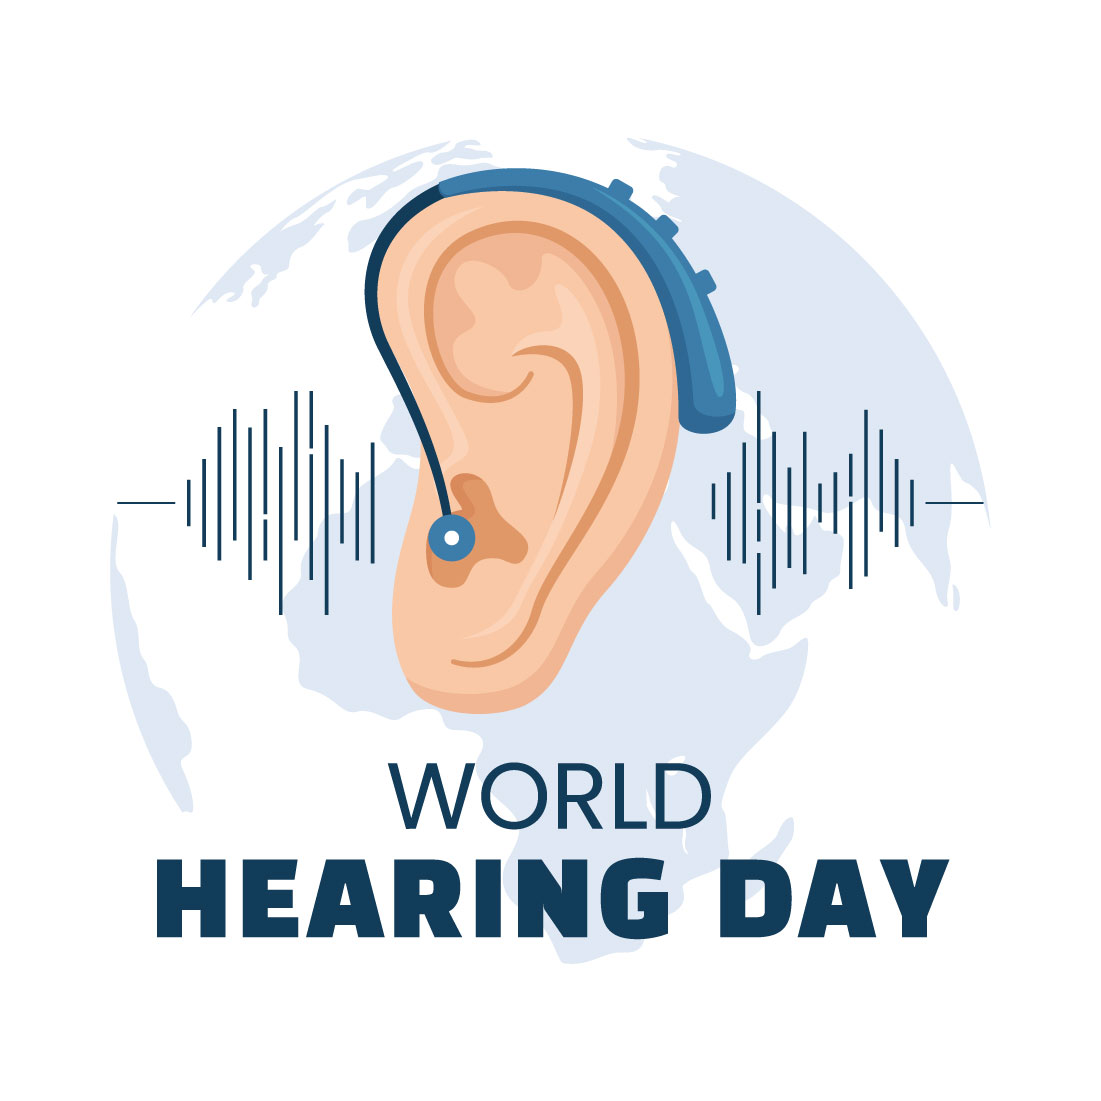 12 World Hearing Day Illustration.